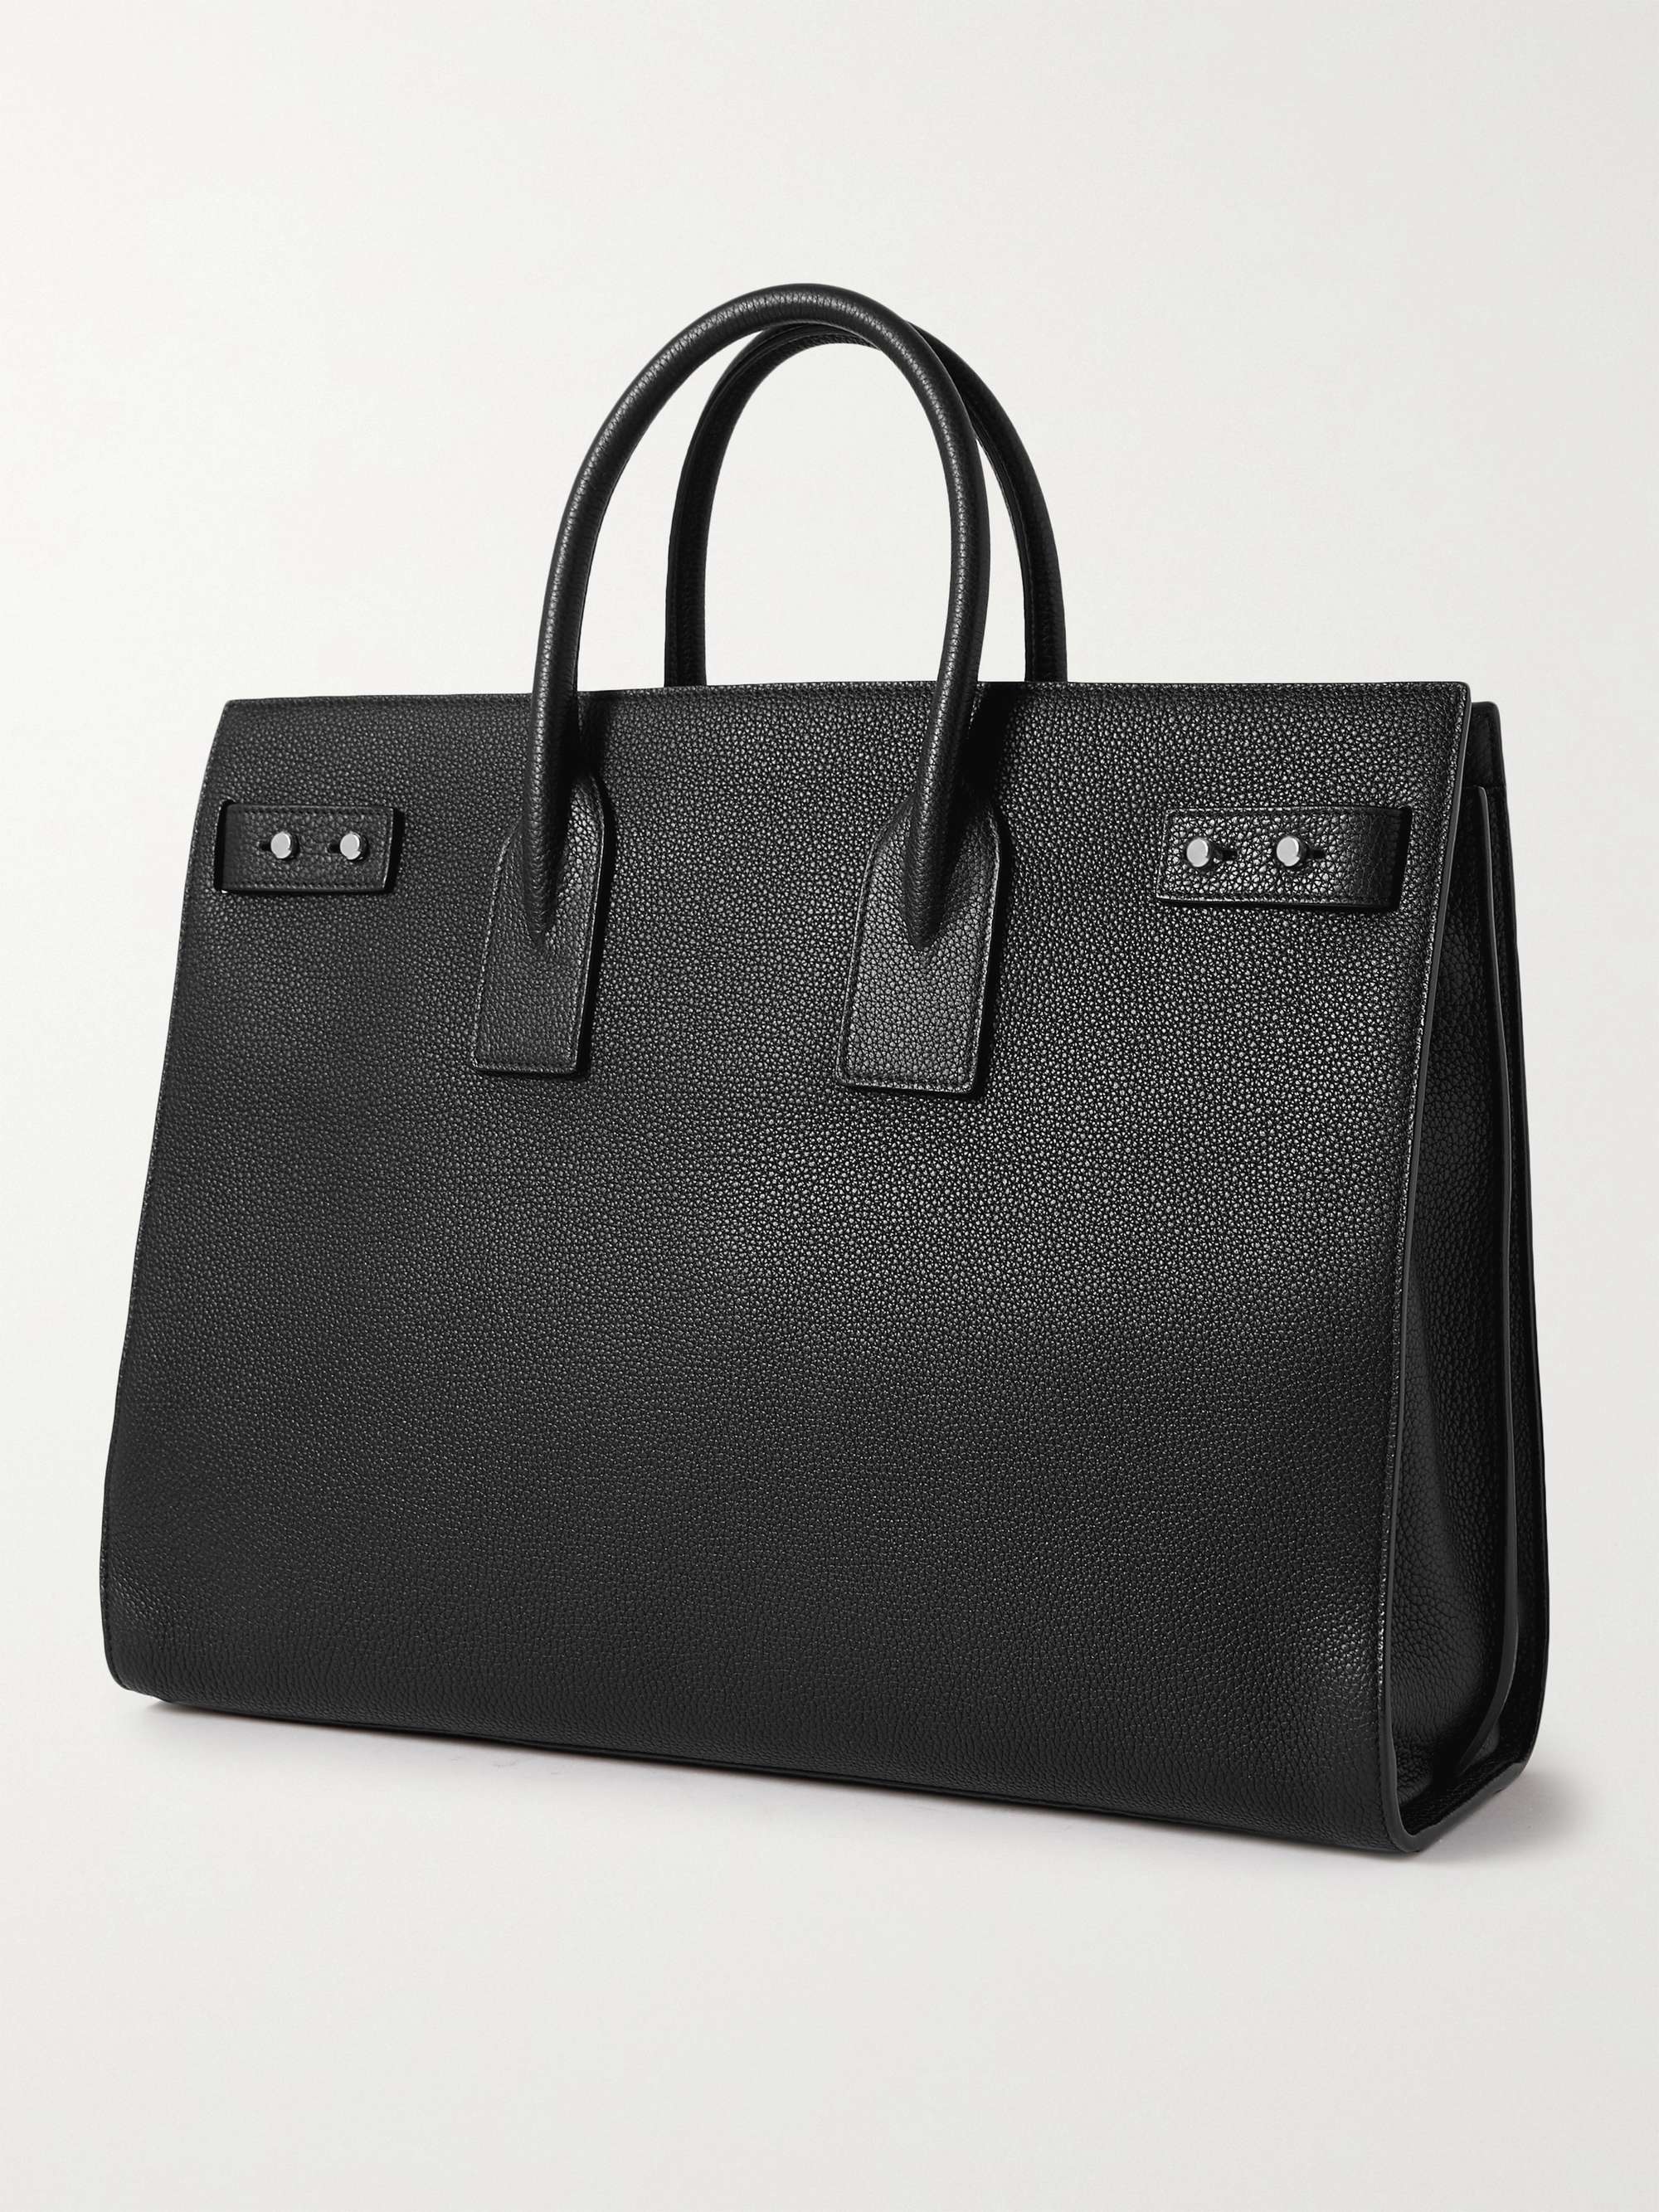 Black Sac de Jour Large Full-Grain Leather Tote Bag | SAINT LAURENT ...